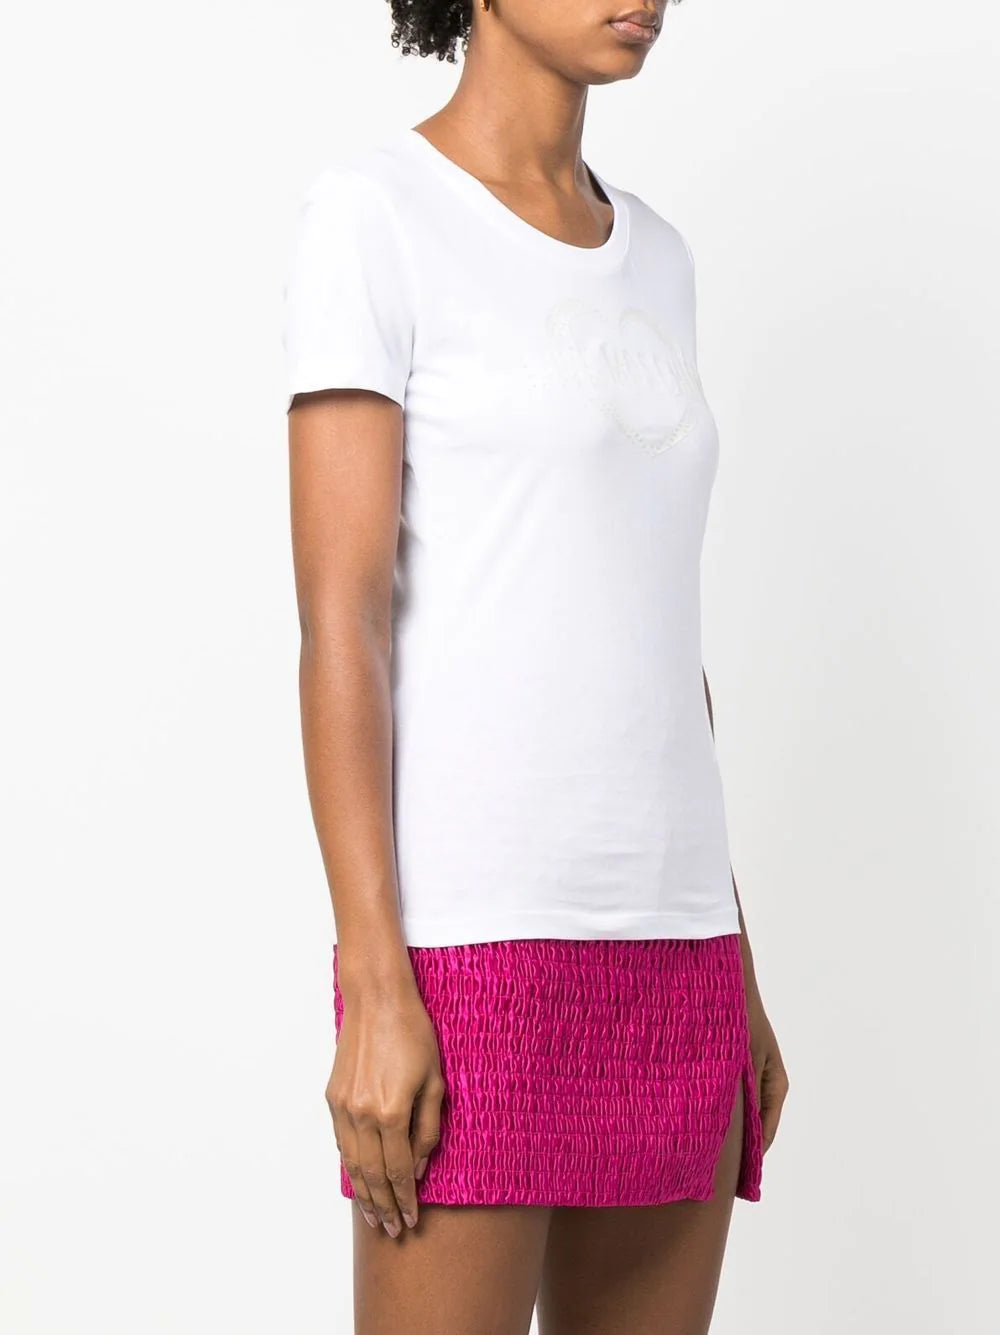 T-Shirt con Stampa Love Moschino / Bianco - Ideal Moda